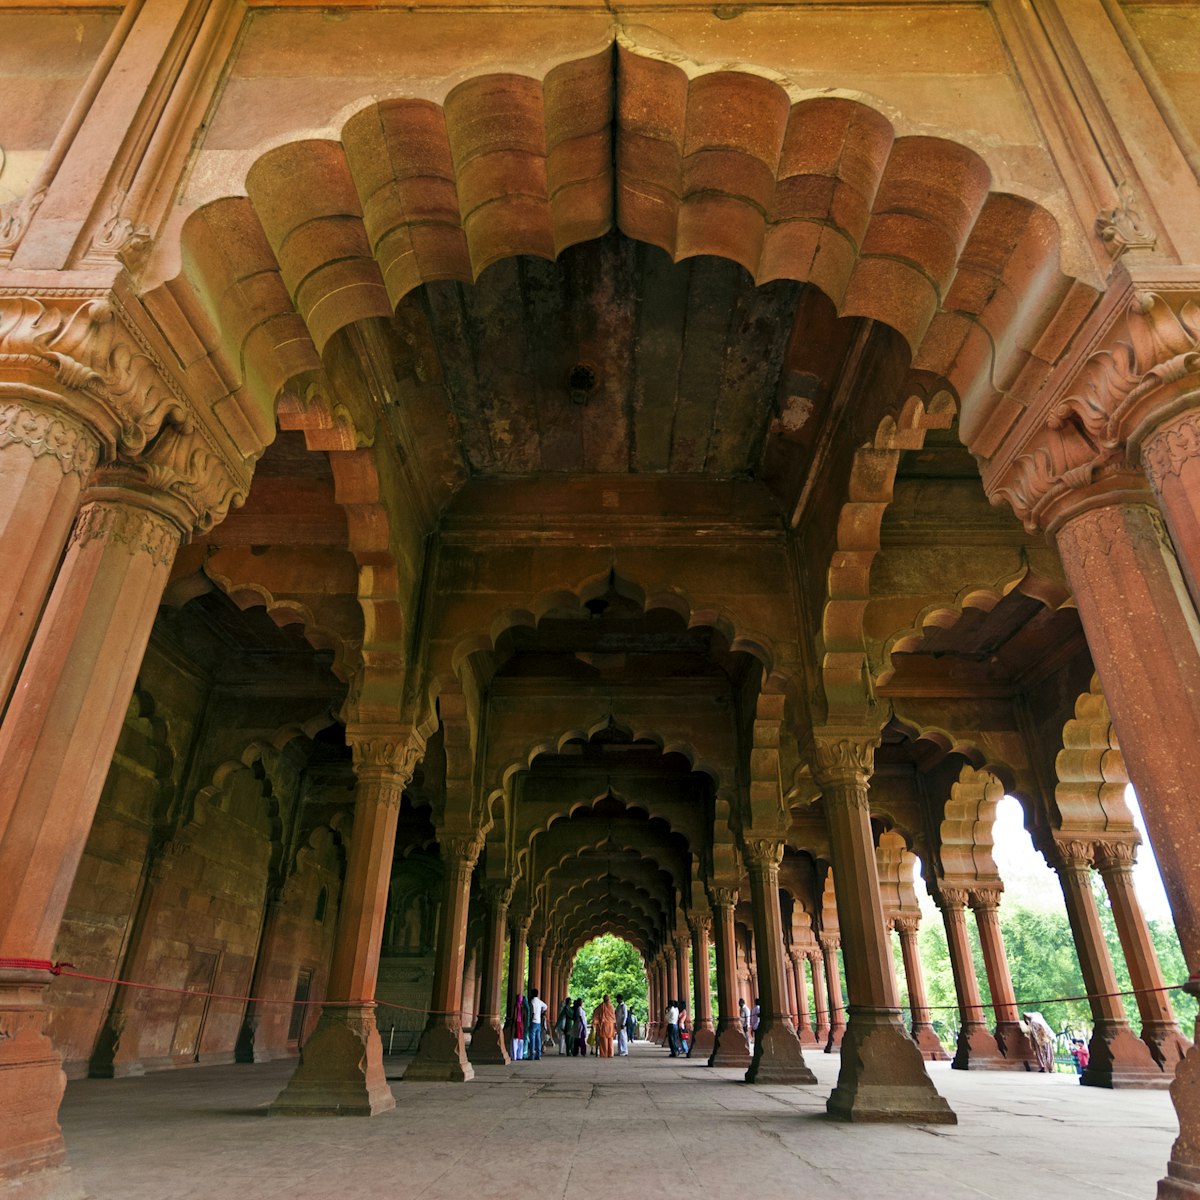 Diwan-i-Am at Delhi's Red Fort.